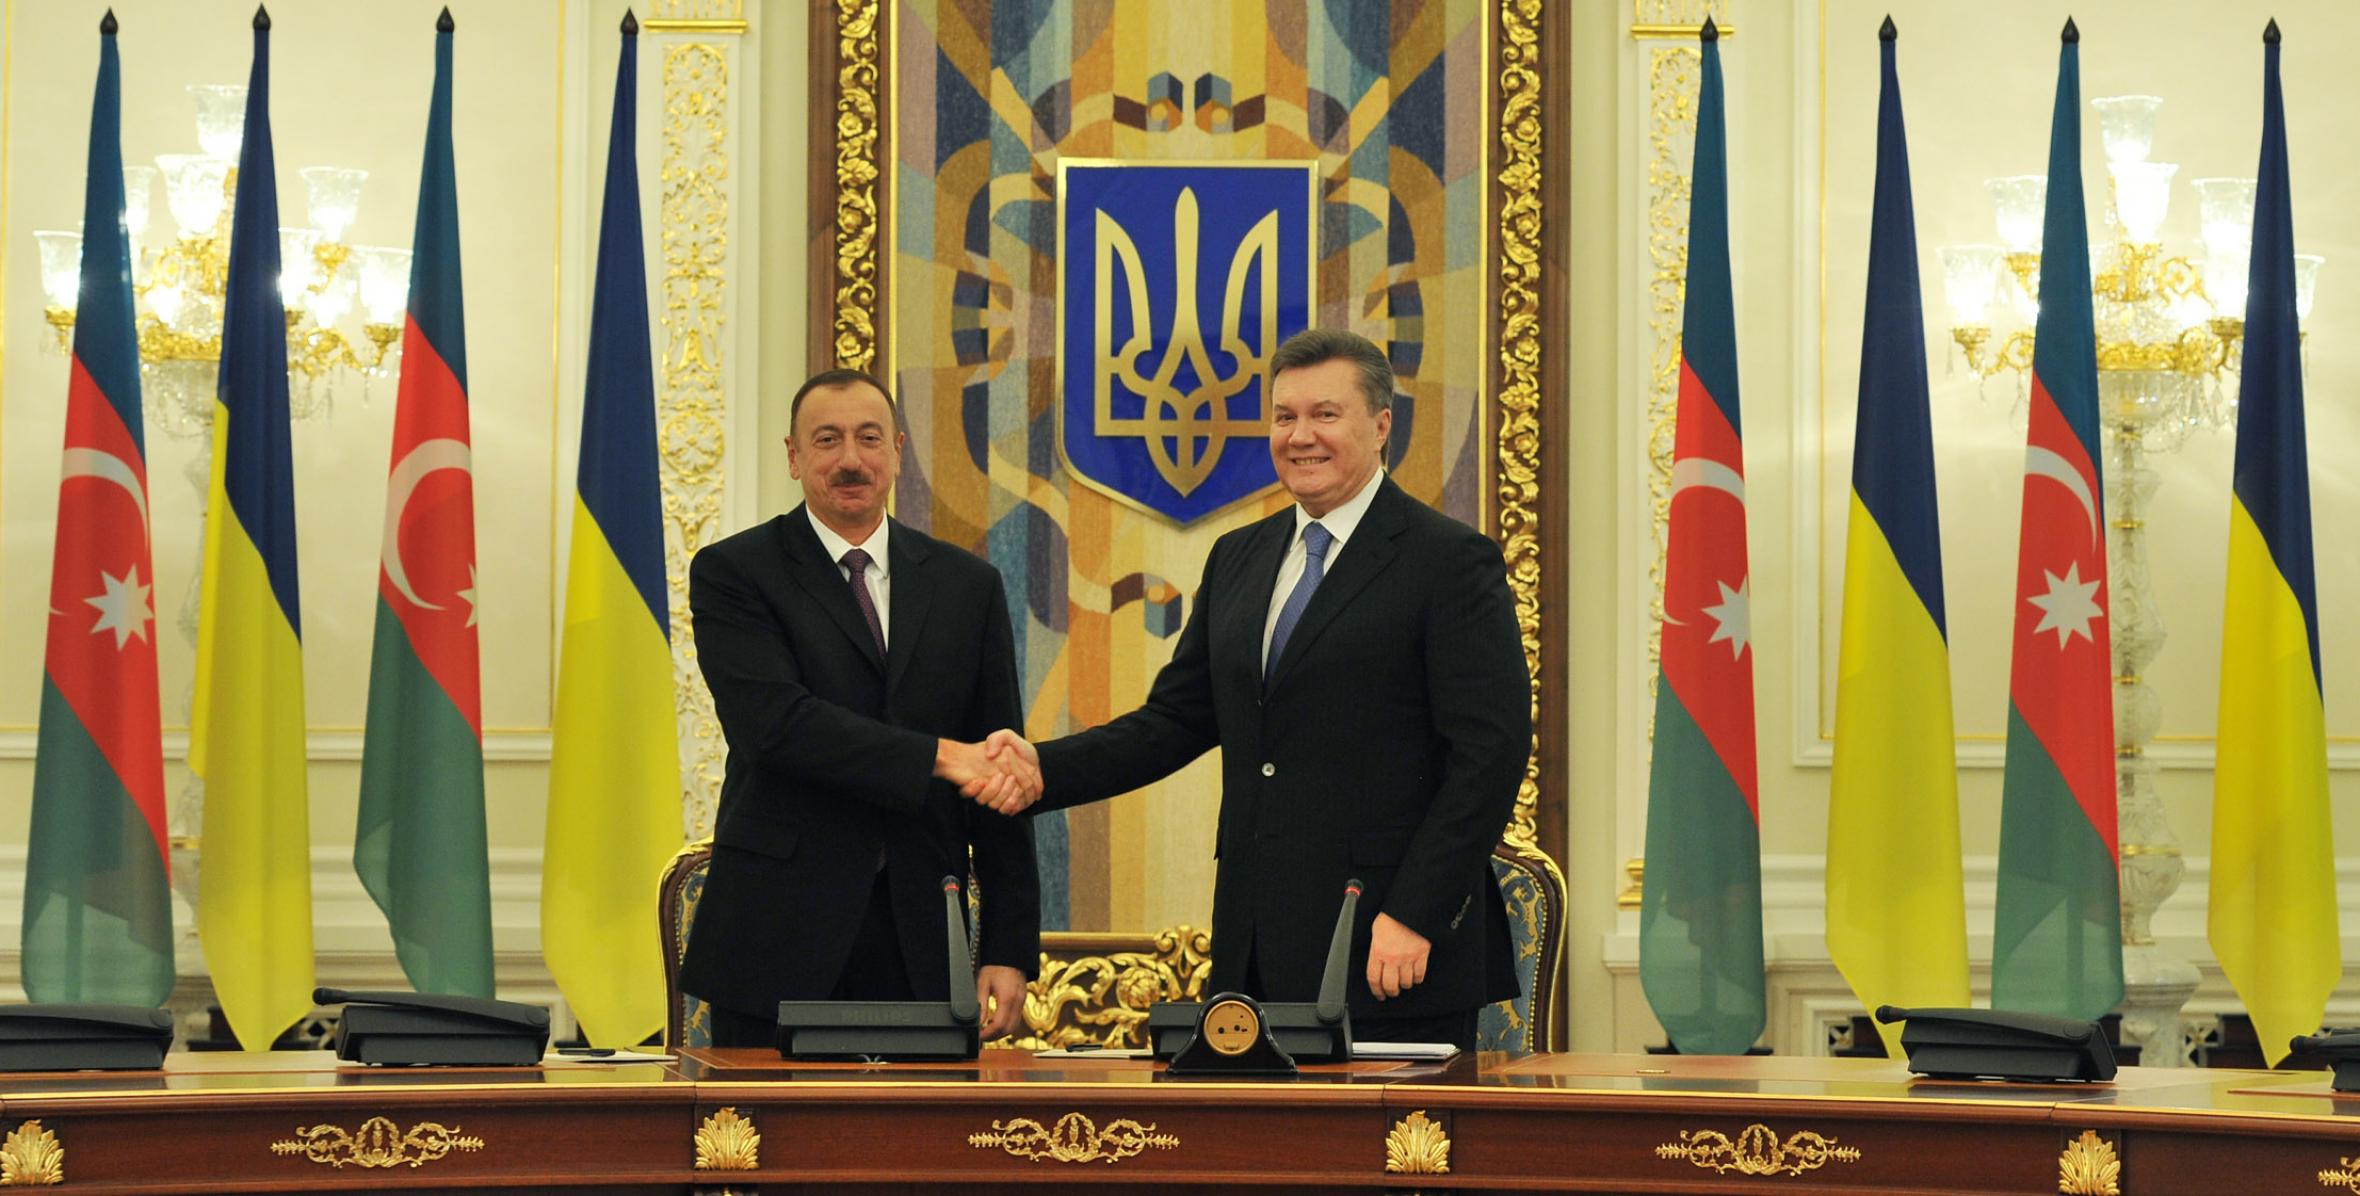 Official visit of Ilham Aliyev to Ukraine